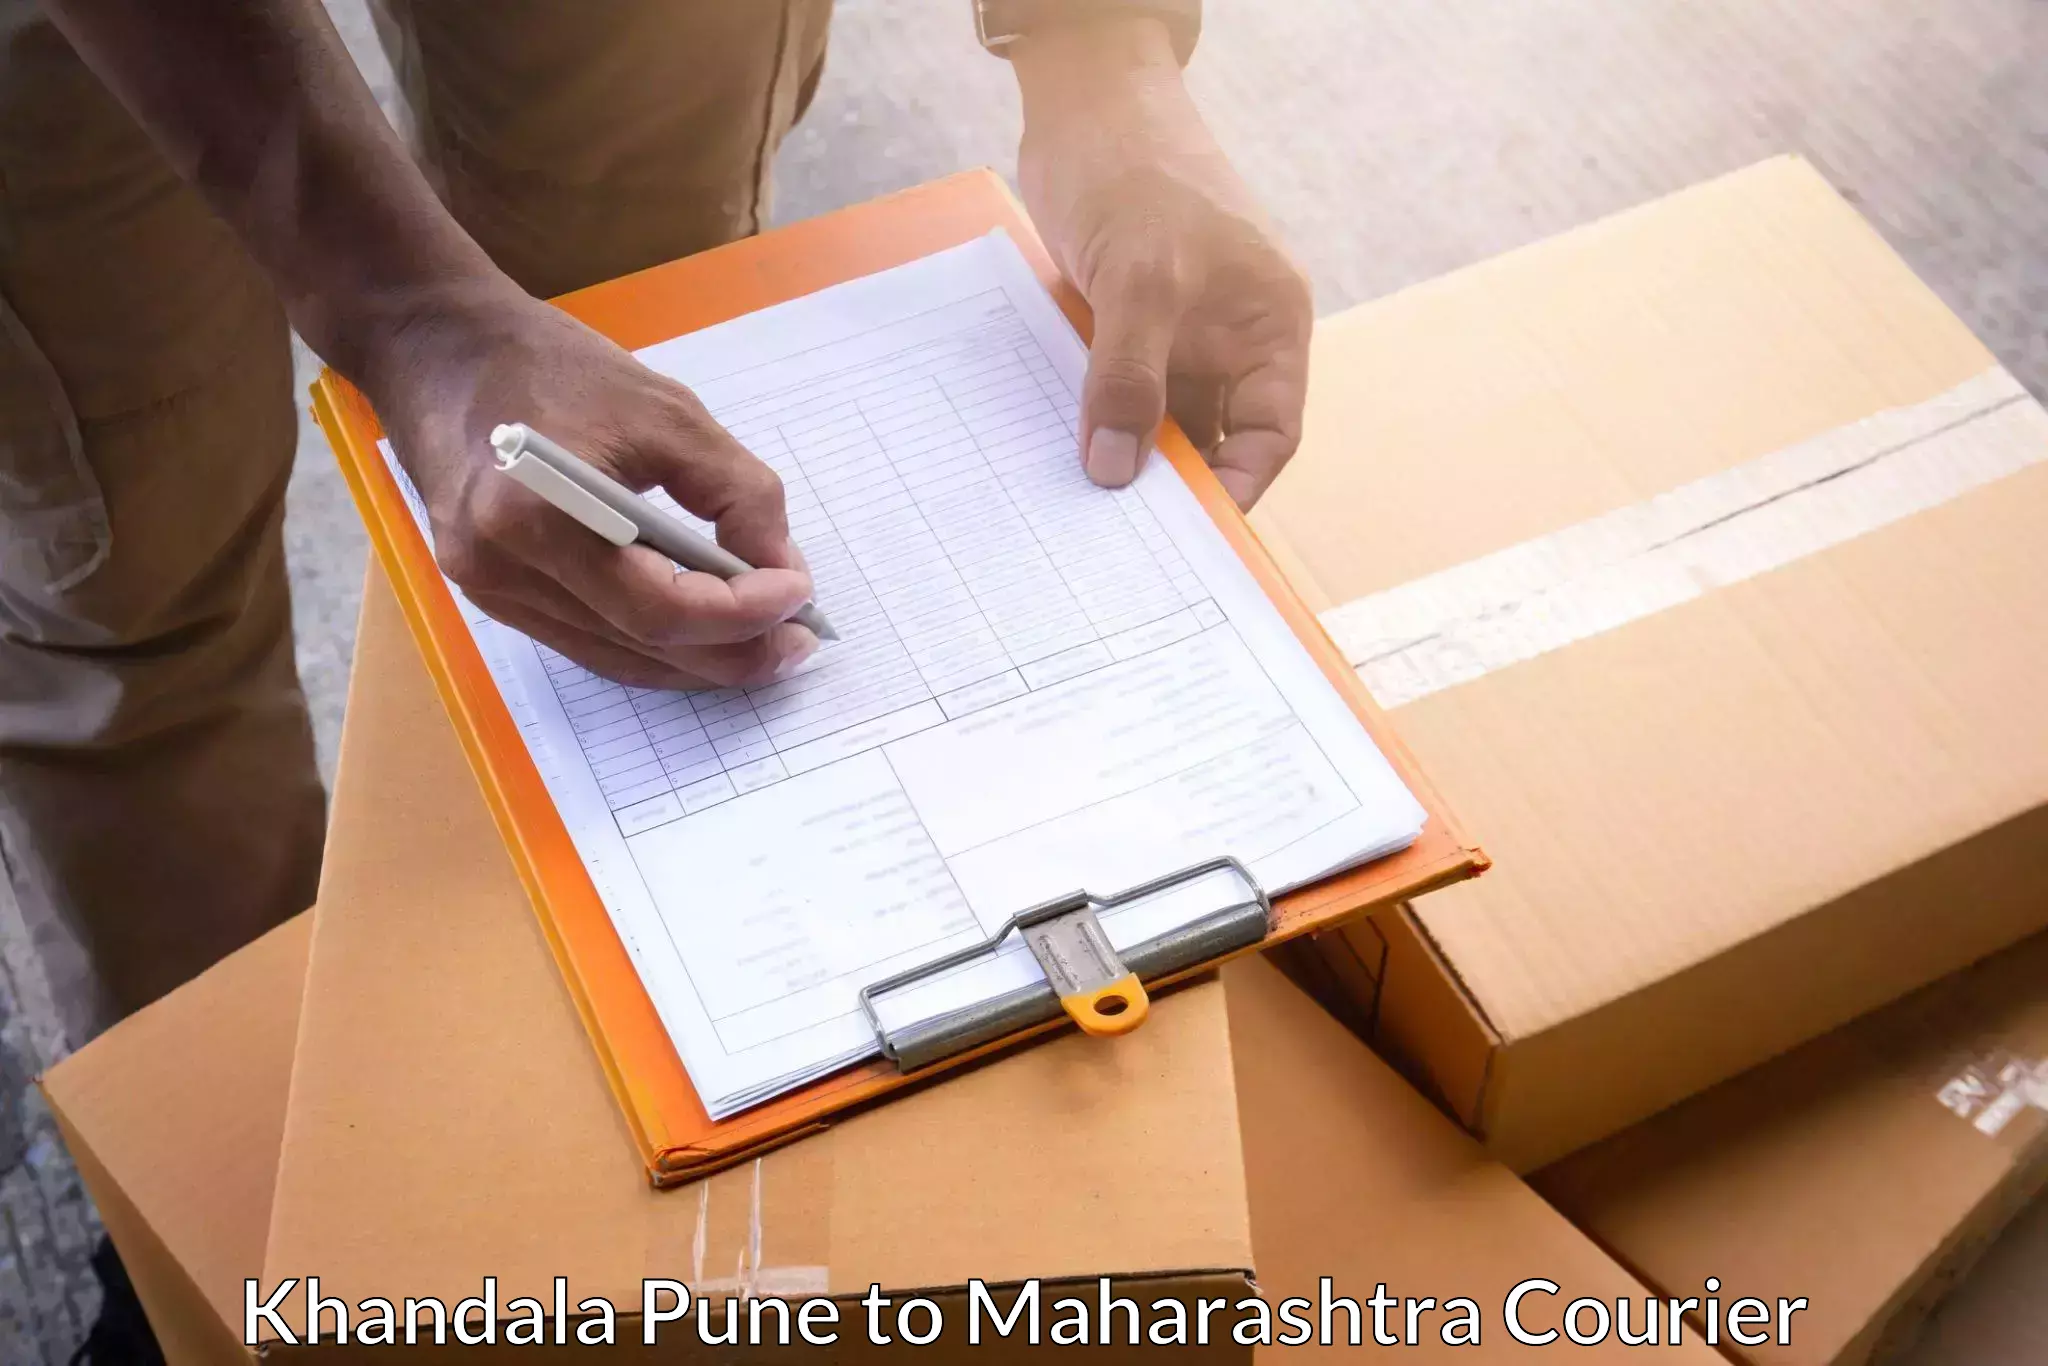 Customer-focused courier Khandala Pune to Koregaon